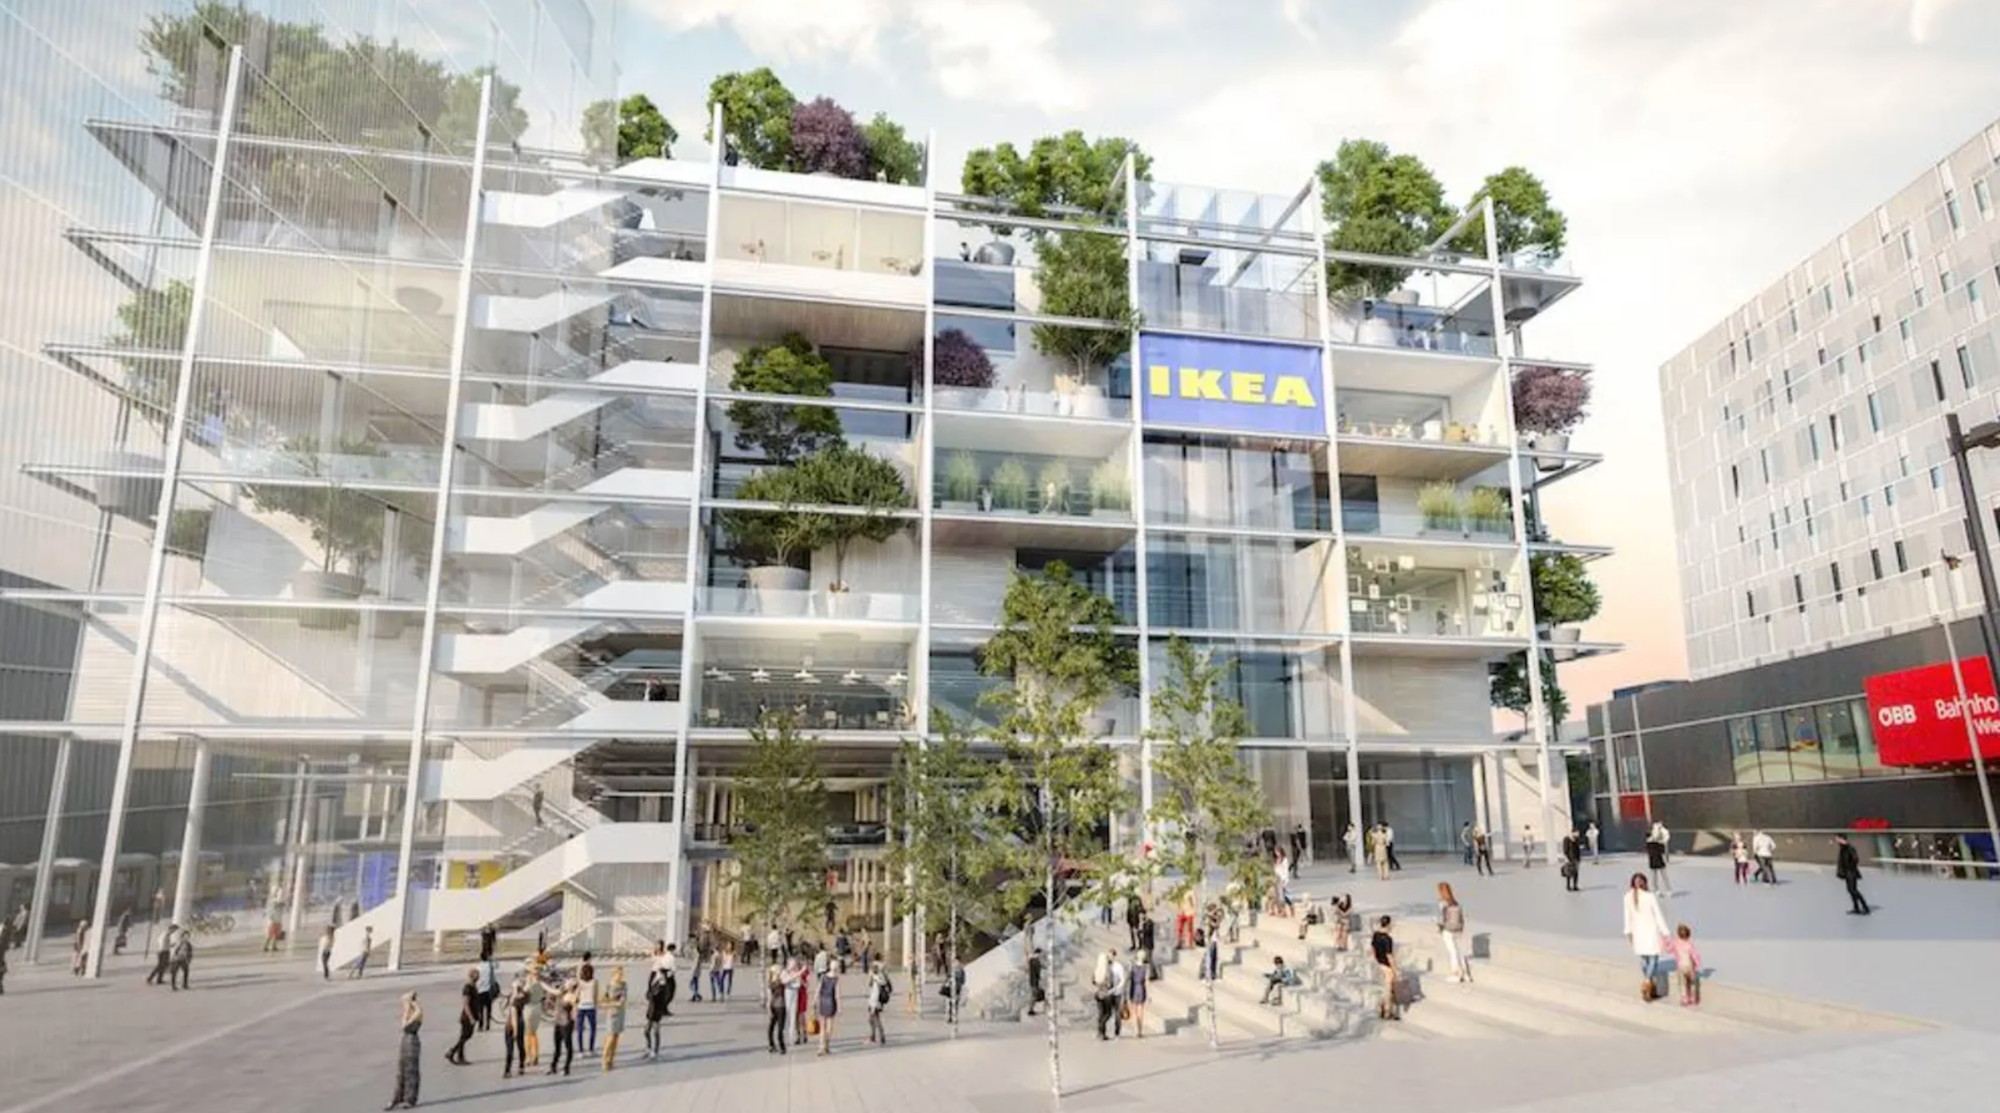 The ultra-green facade of IKEA's new urban location in Vienna, Austria.